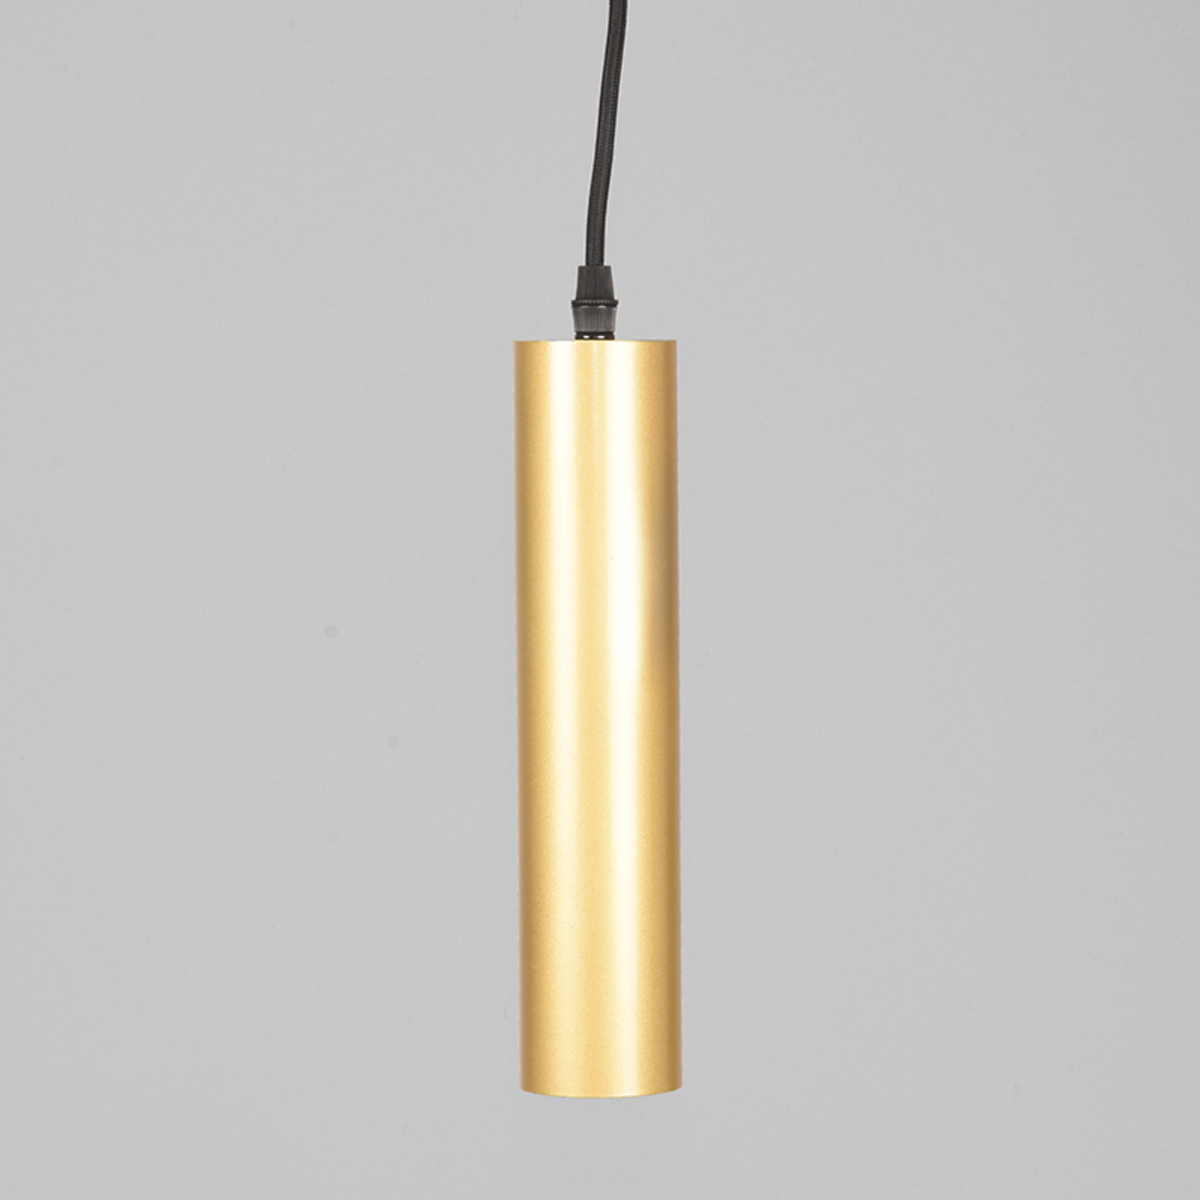 LABEL51 Hanglamp Ferroli - Antiek goud - Metaal